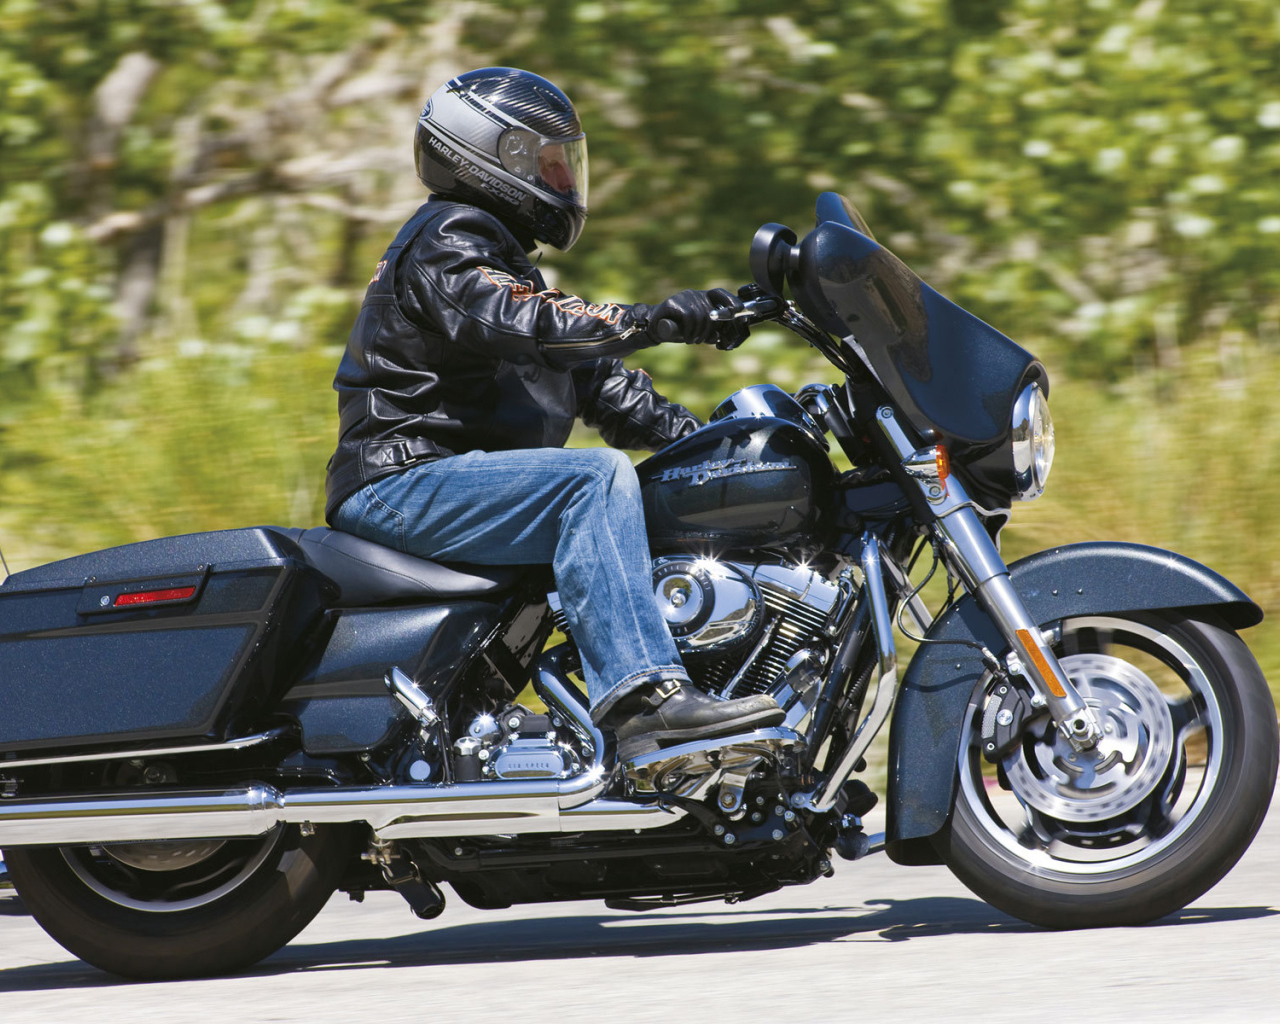 Новый надежный мотоцикл Harley-Davidson Street Glide